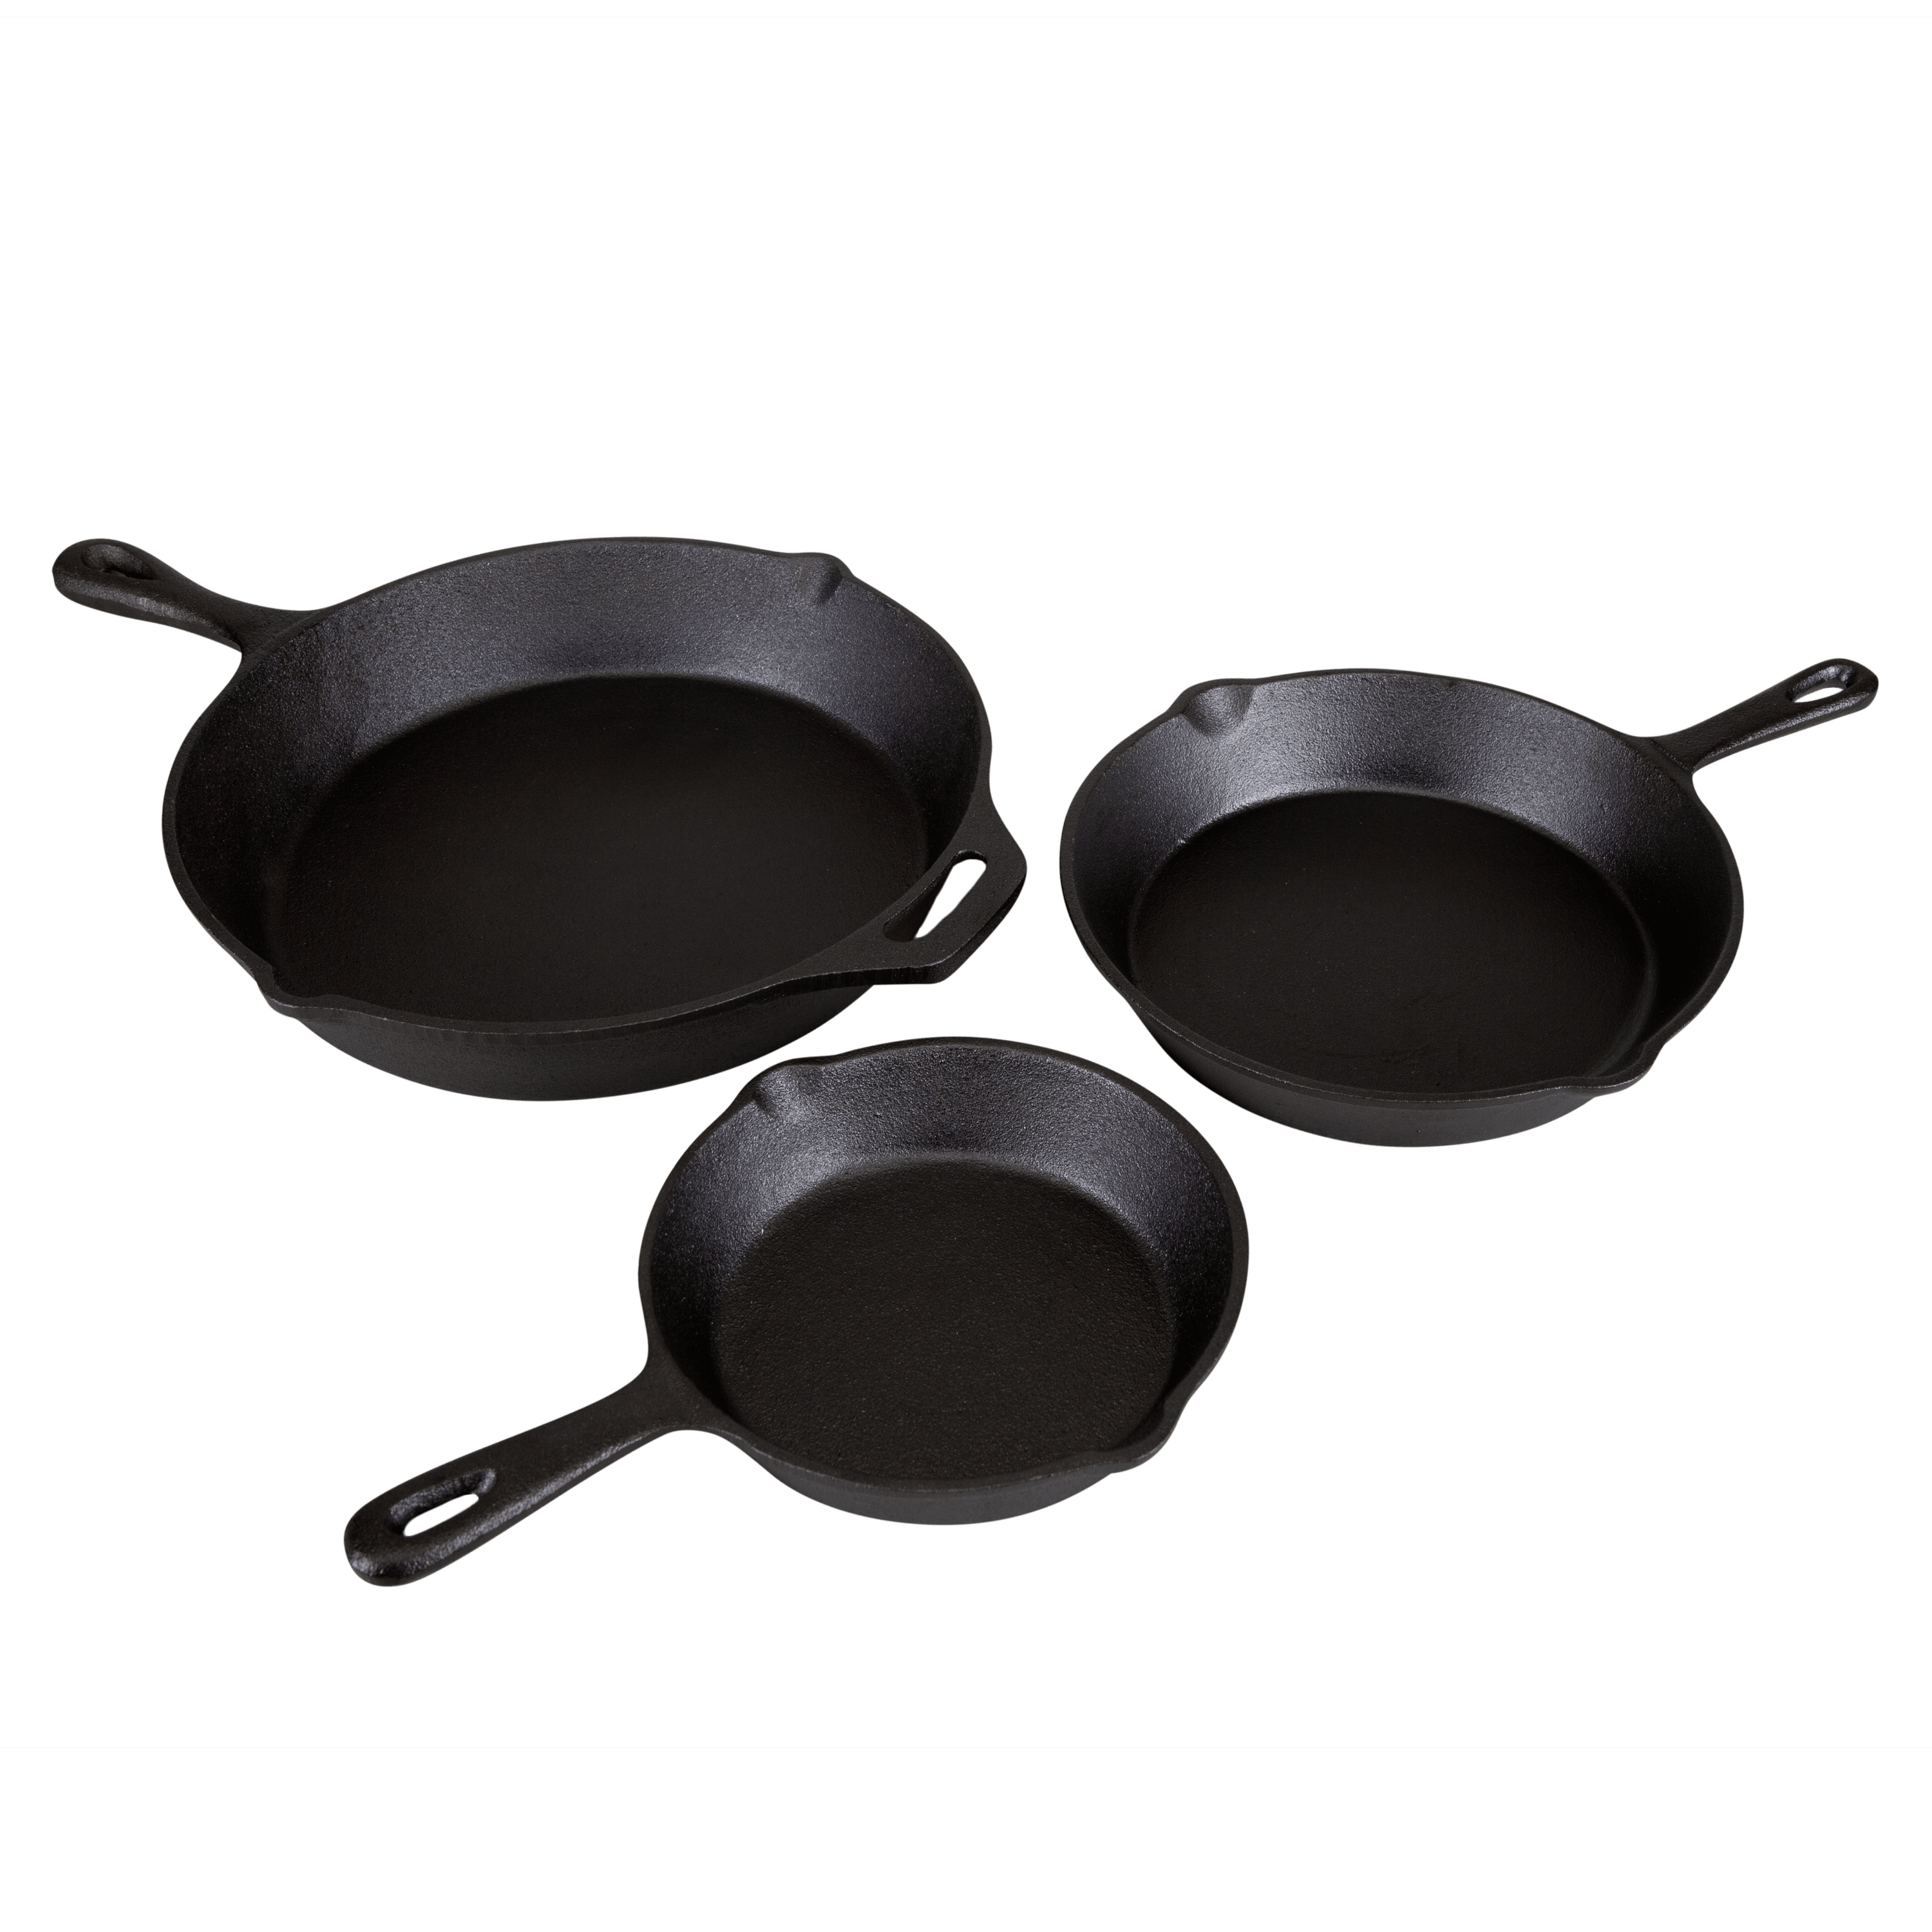 Cooks 3-pc. Cast Iron Fry Pan Set